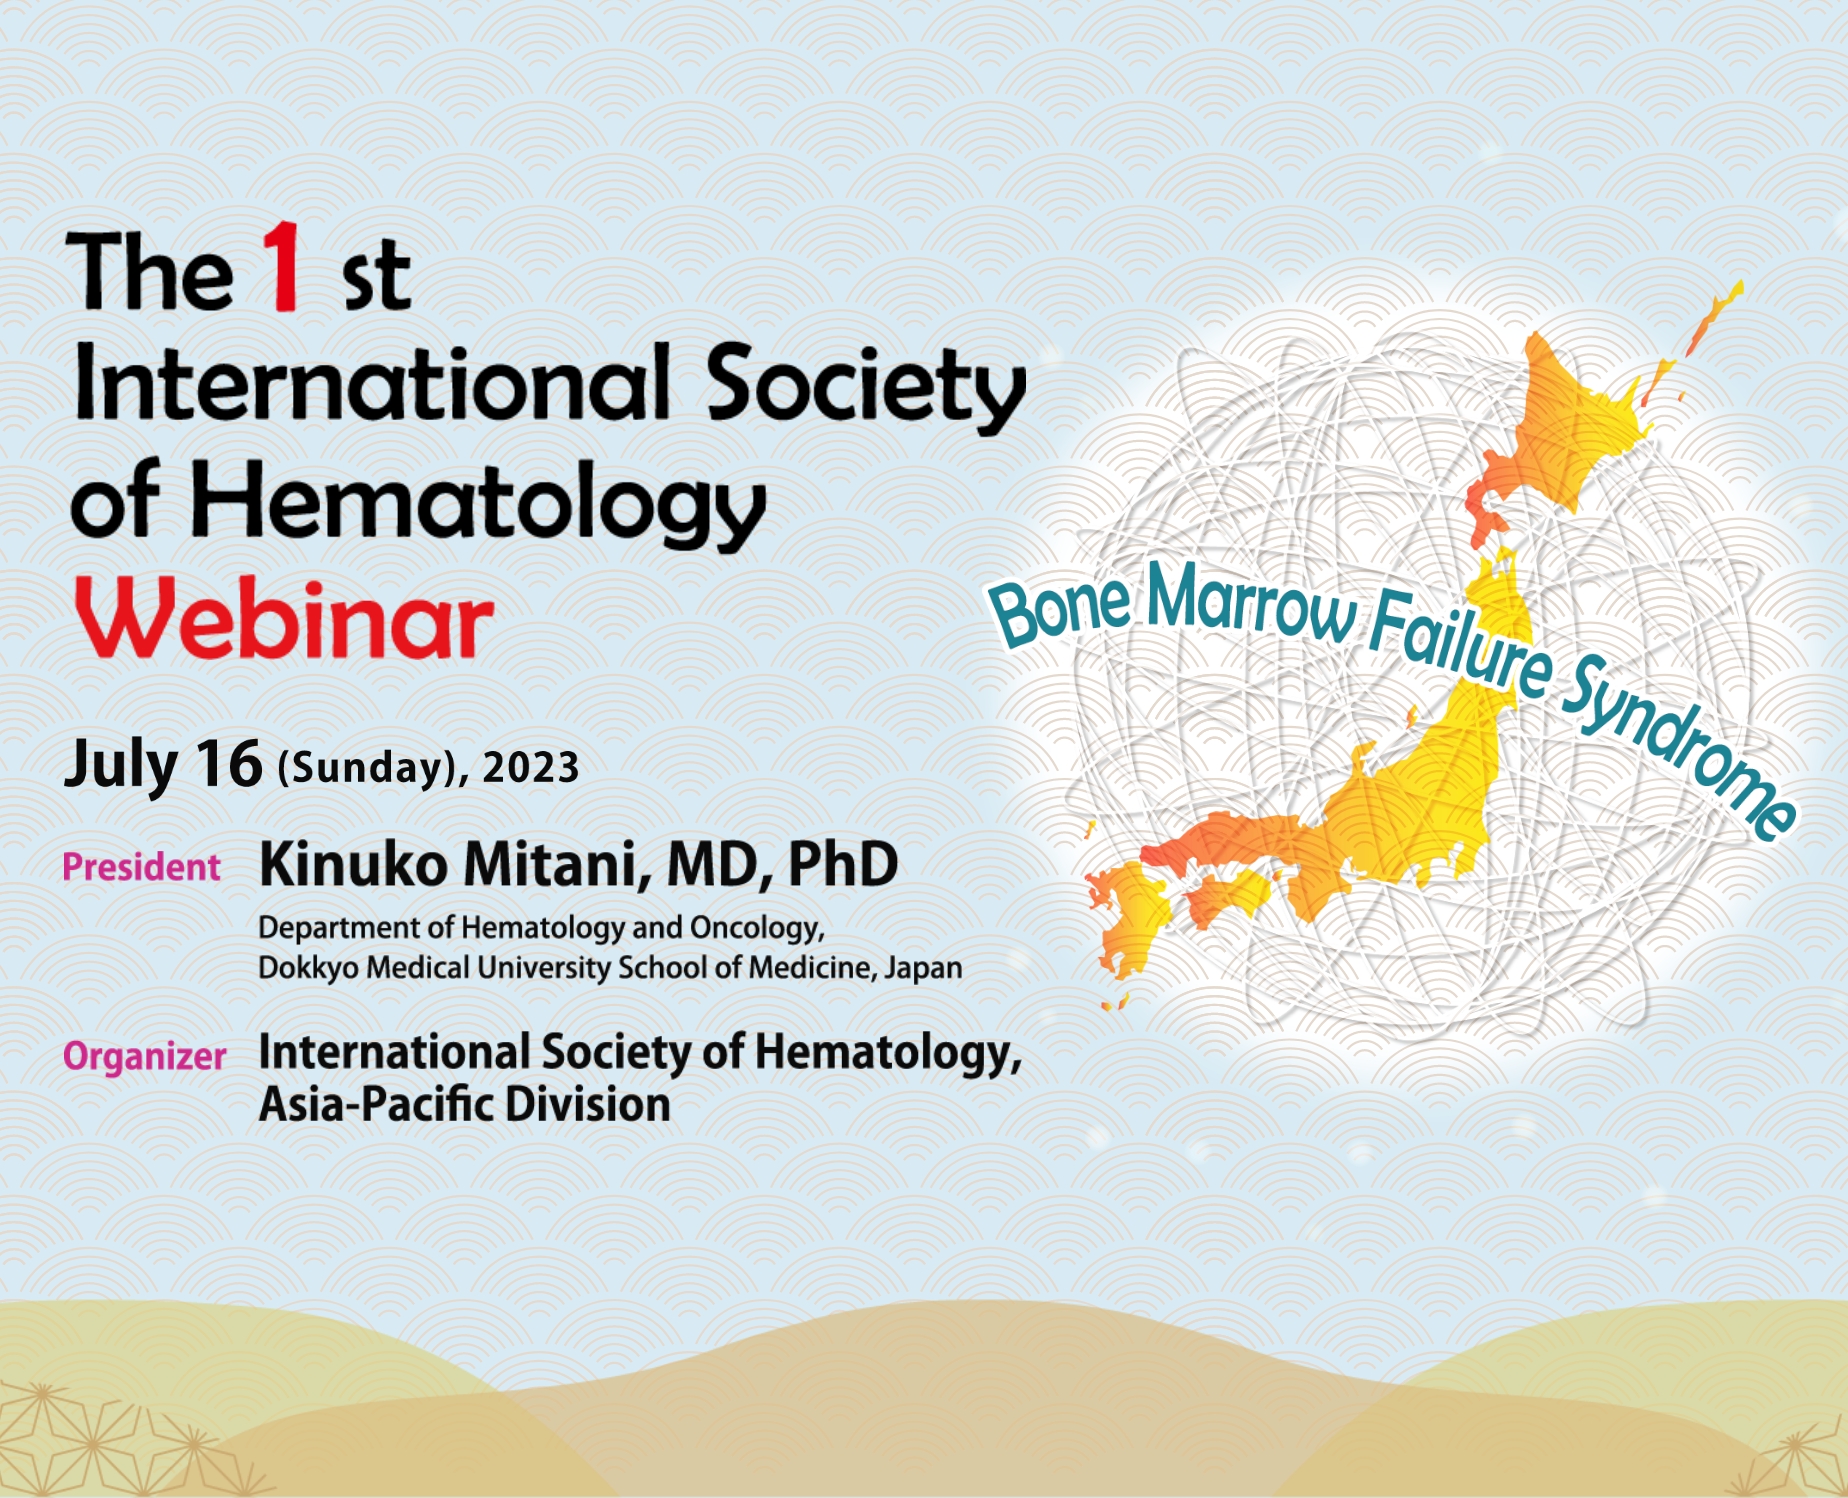 The 1st International Society of Hematology Webinar